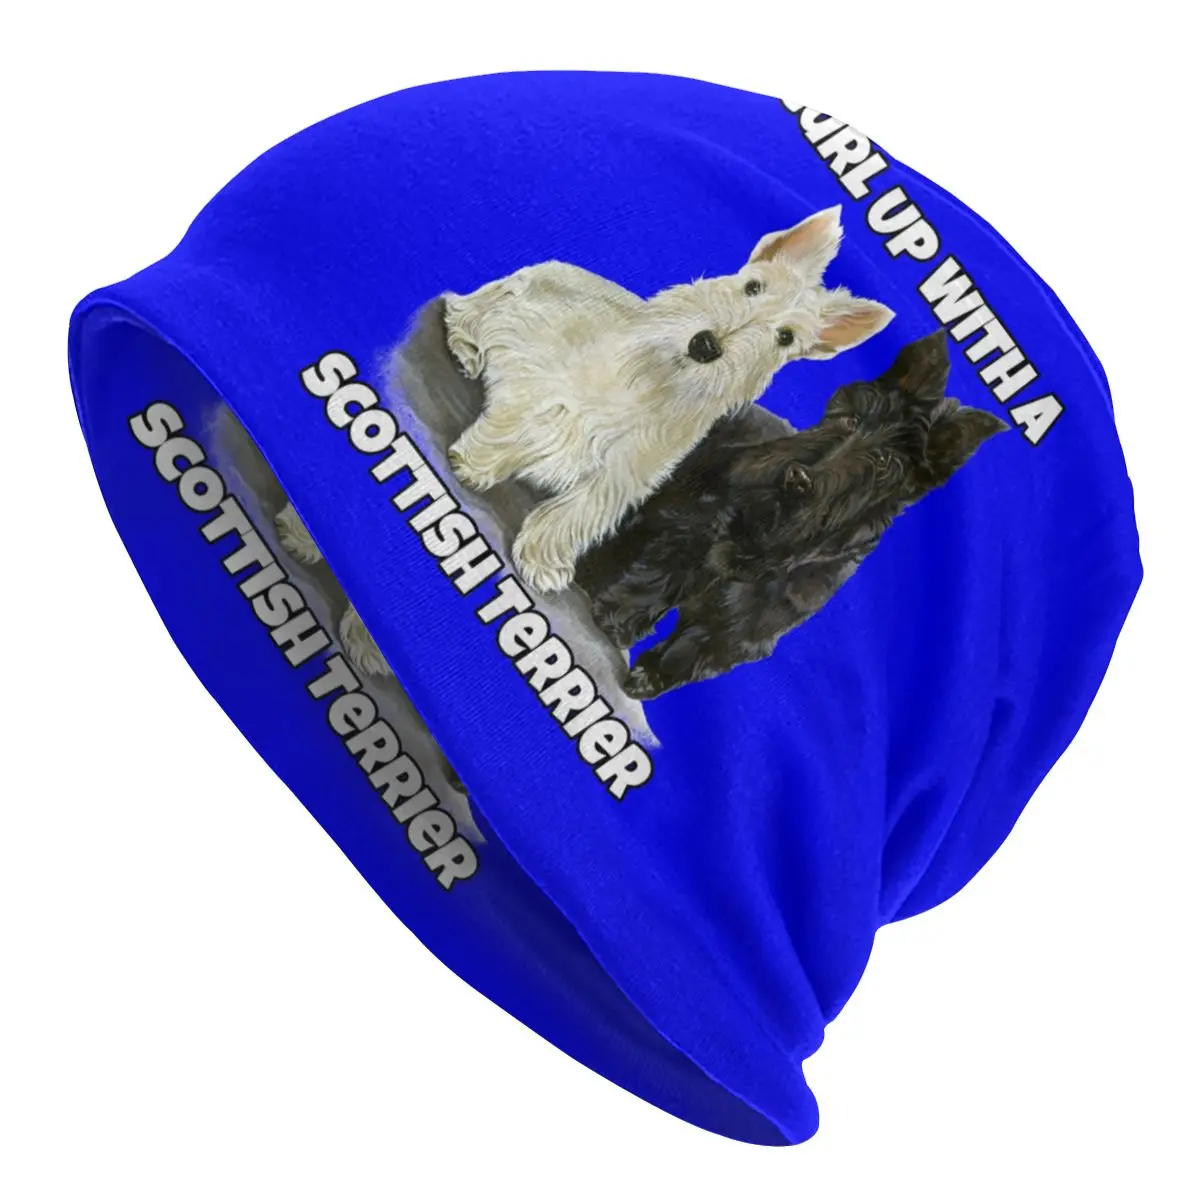 Unisex Bonnet Knitting Hat Curl Up With A Scottish Terrier Pet Owner Cool Beanies Caps Adult Dog Scottie Pet Beanie Hats Ski Cap